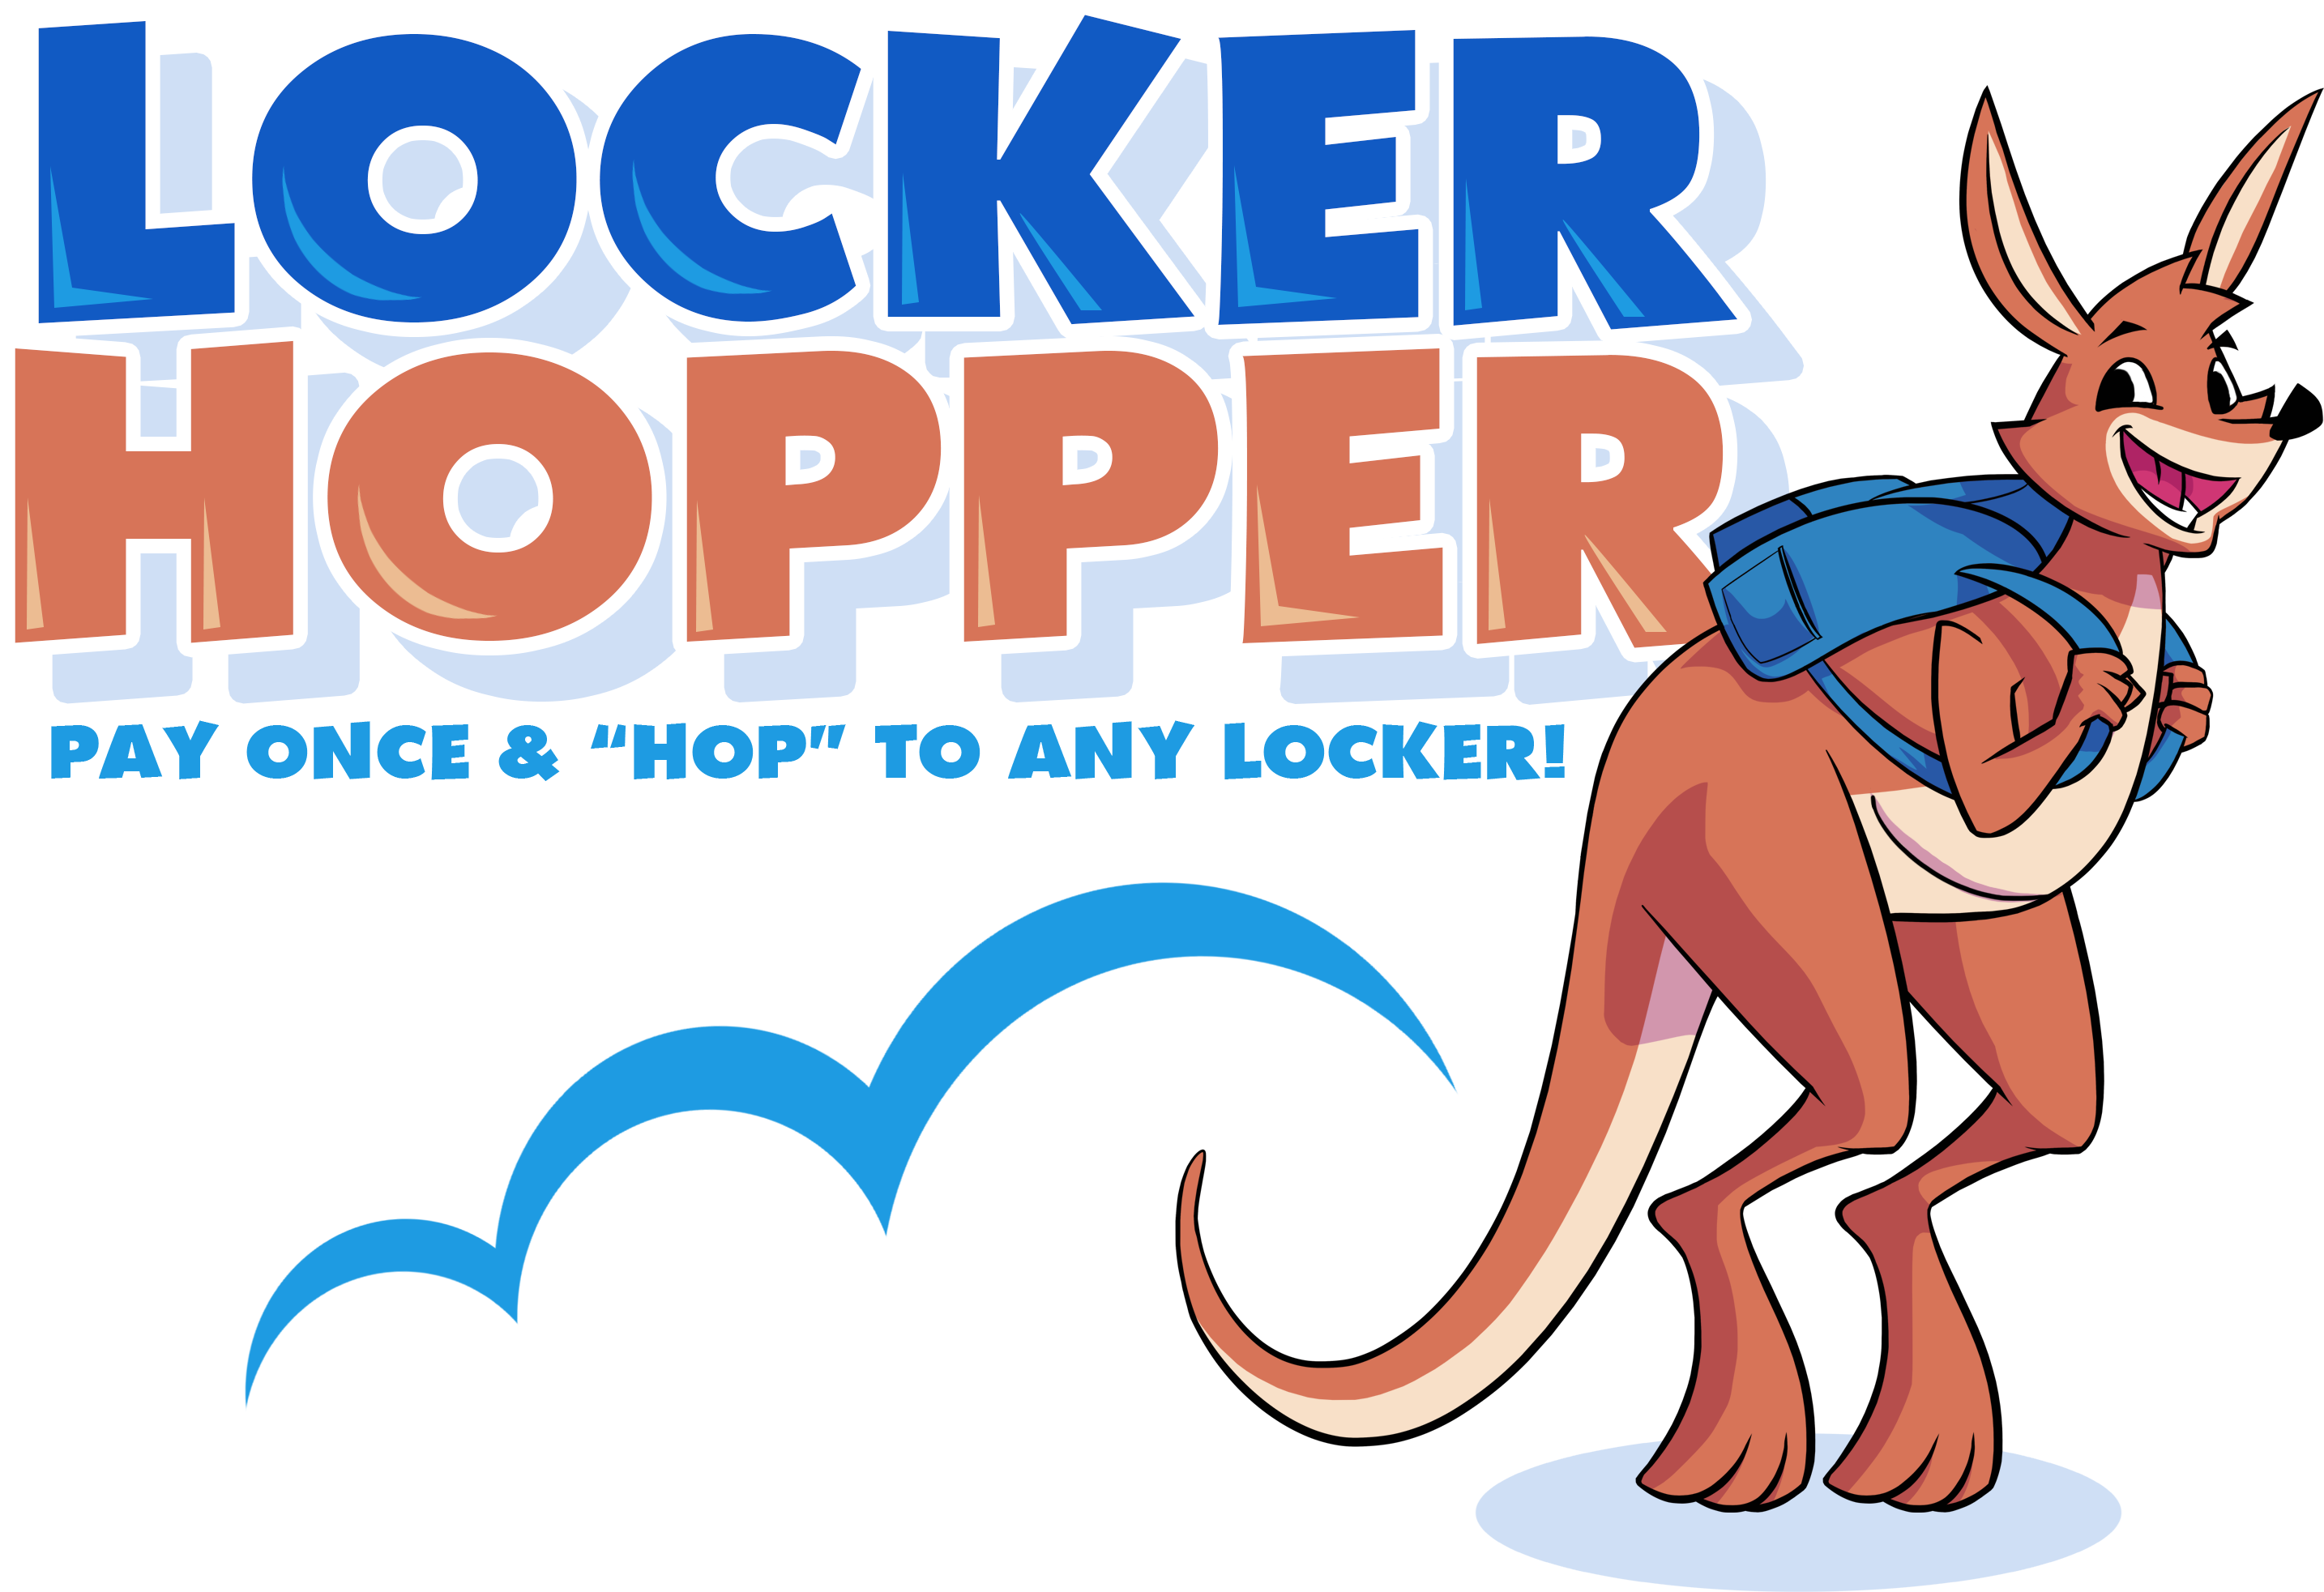 Locker Hopper